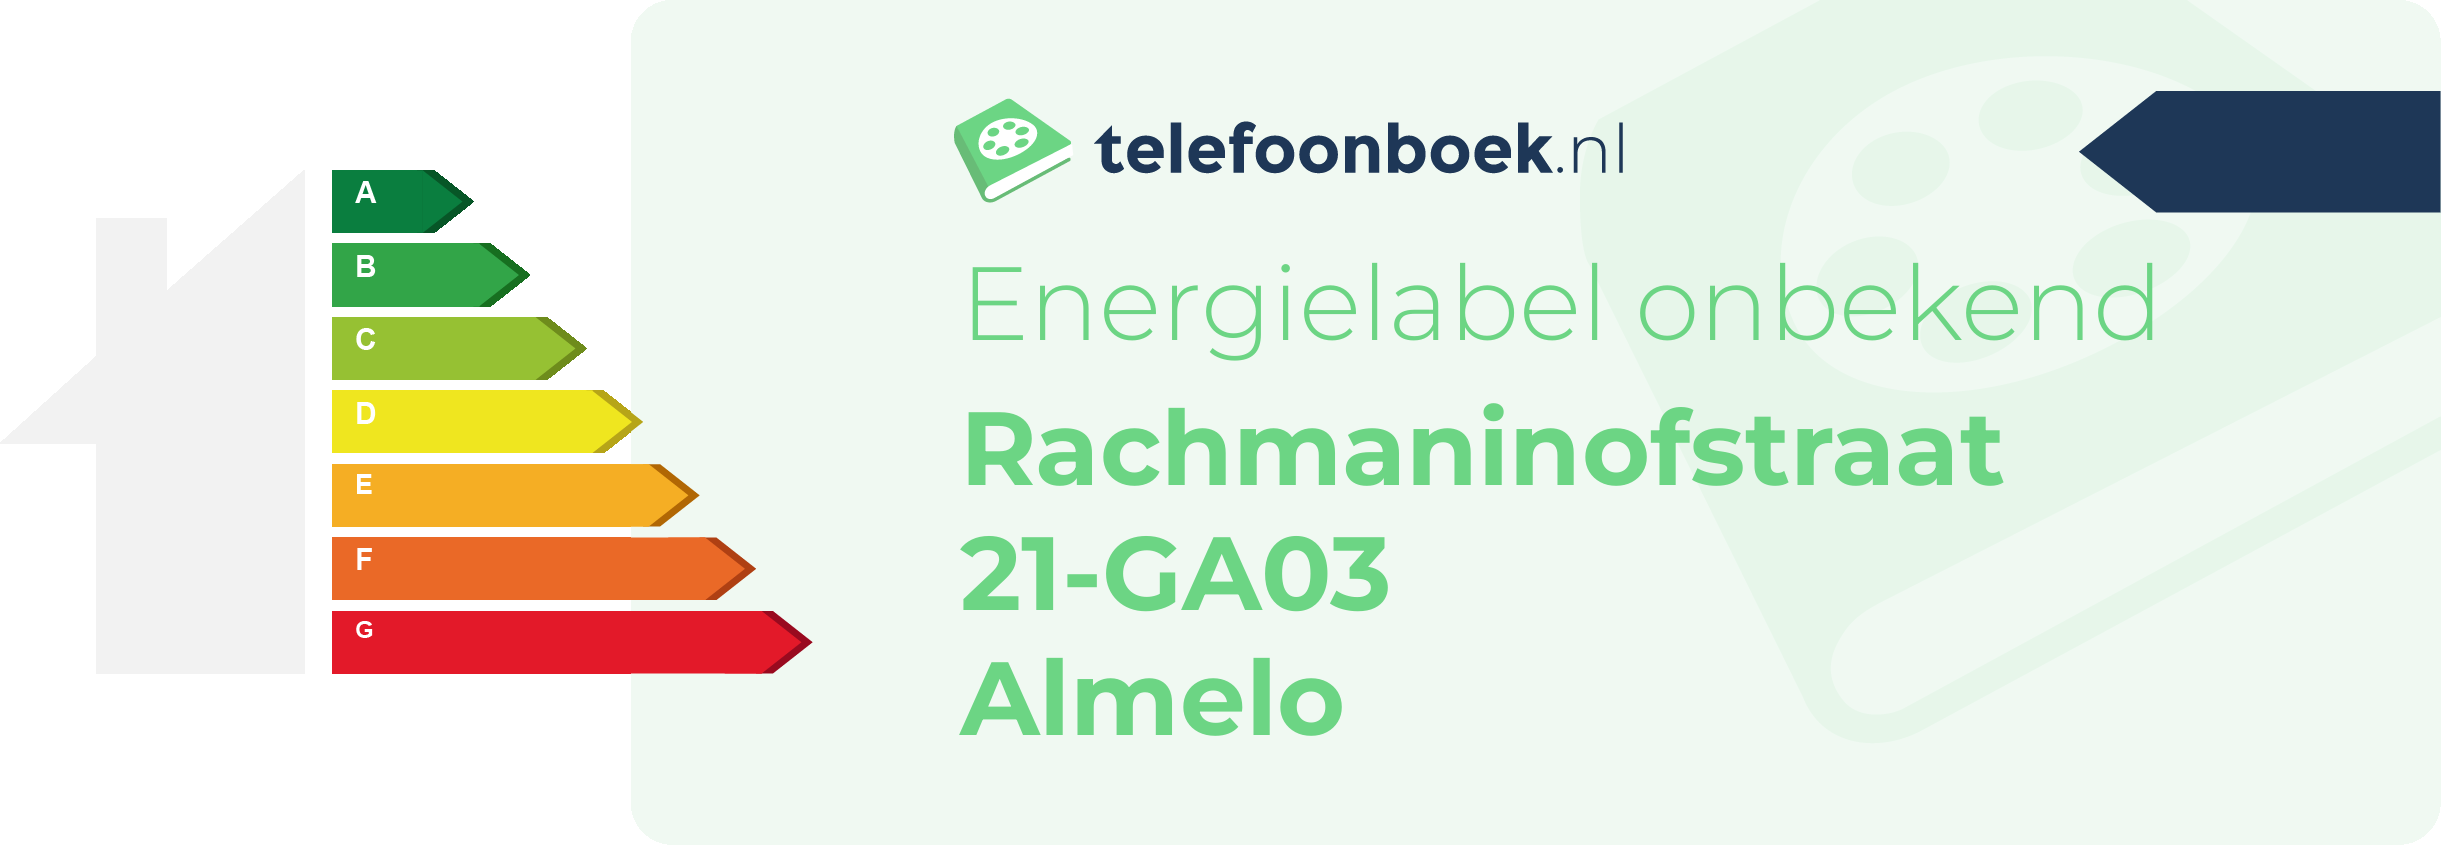 Energielabel Rachmaninofstraat 21-GA03 Almelo